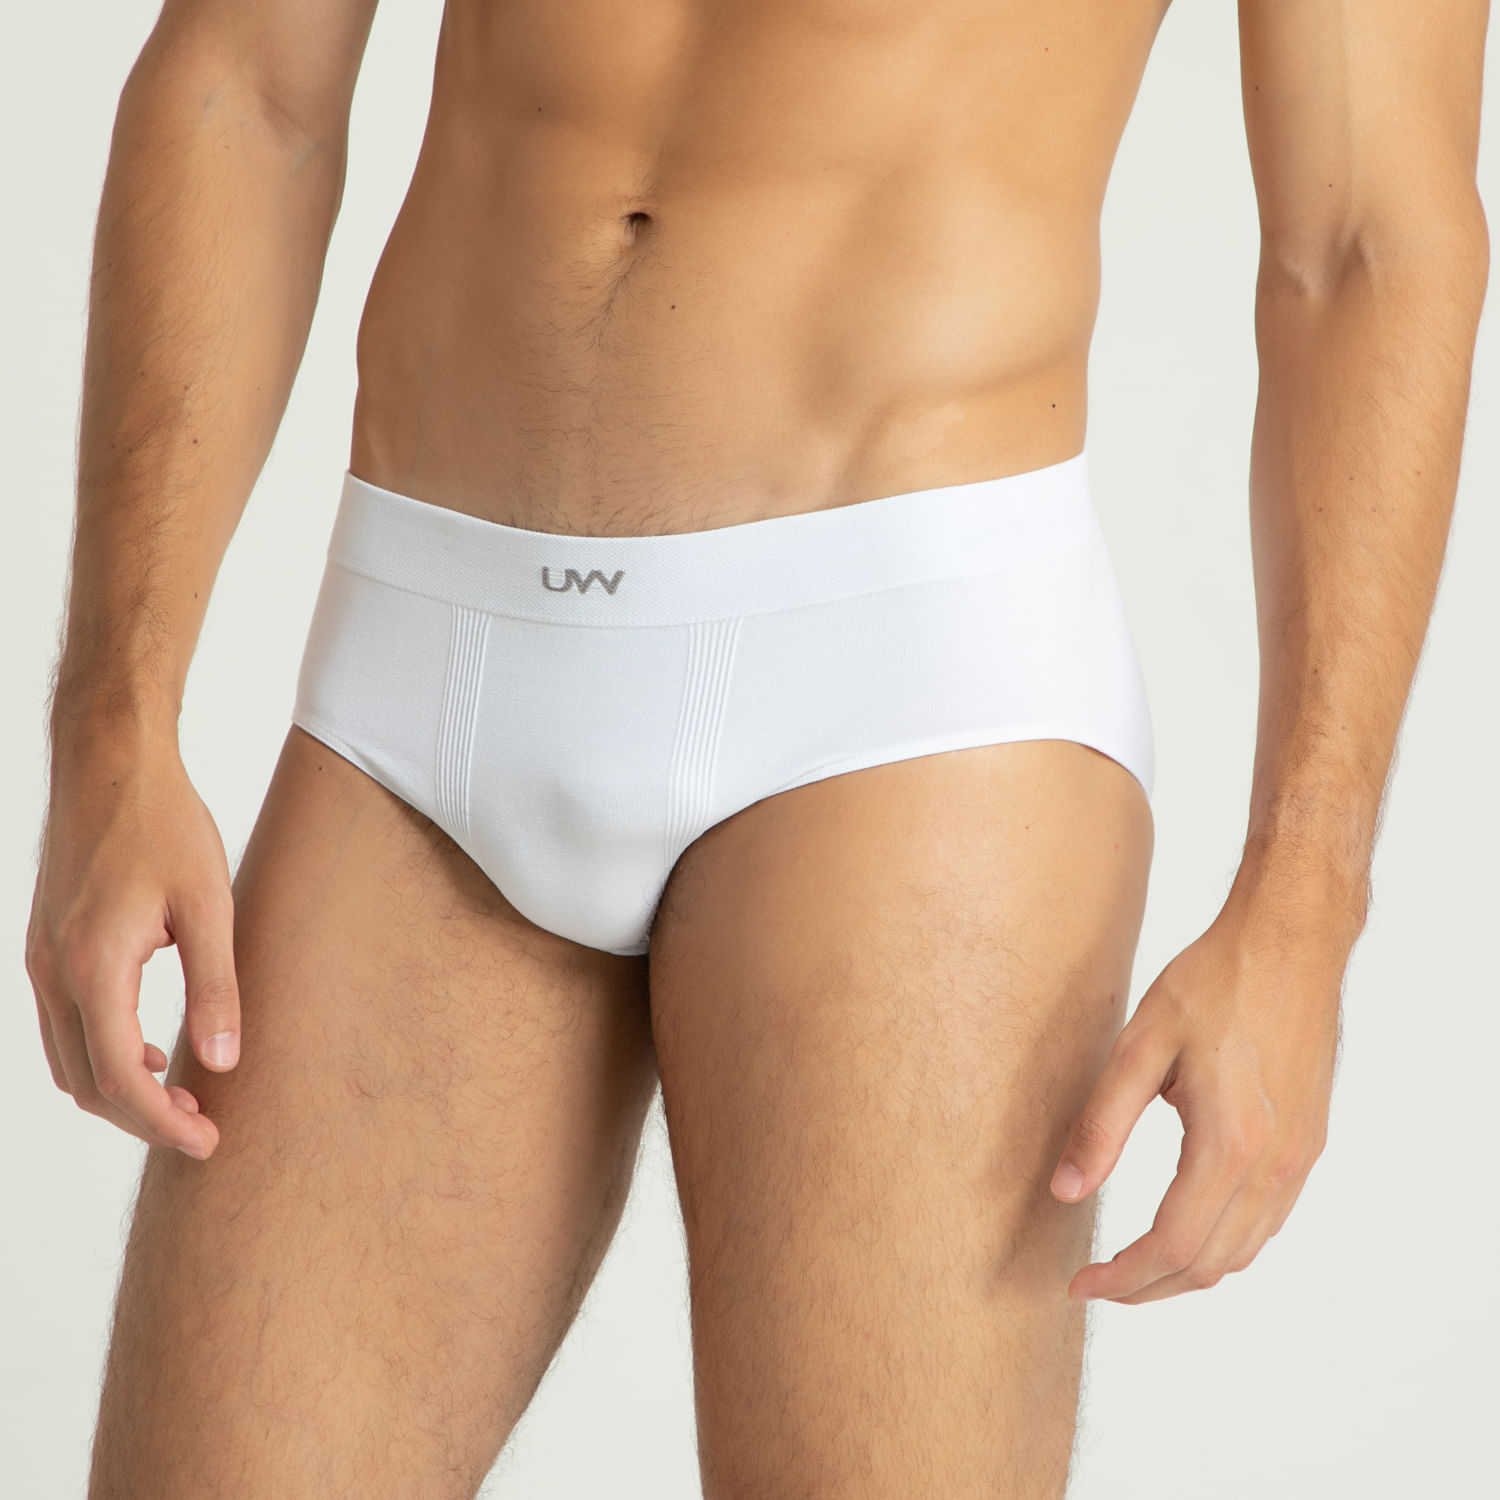 Blusa de Moletom Aberta Calvin Klein Underwear Logo Cinza - Compre